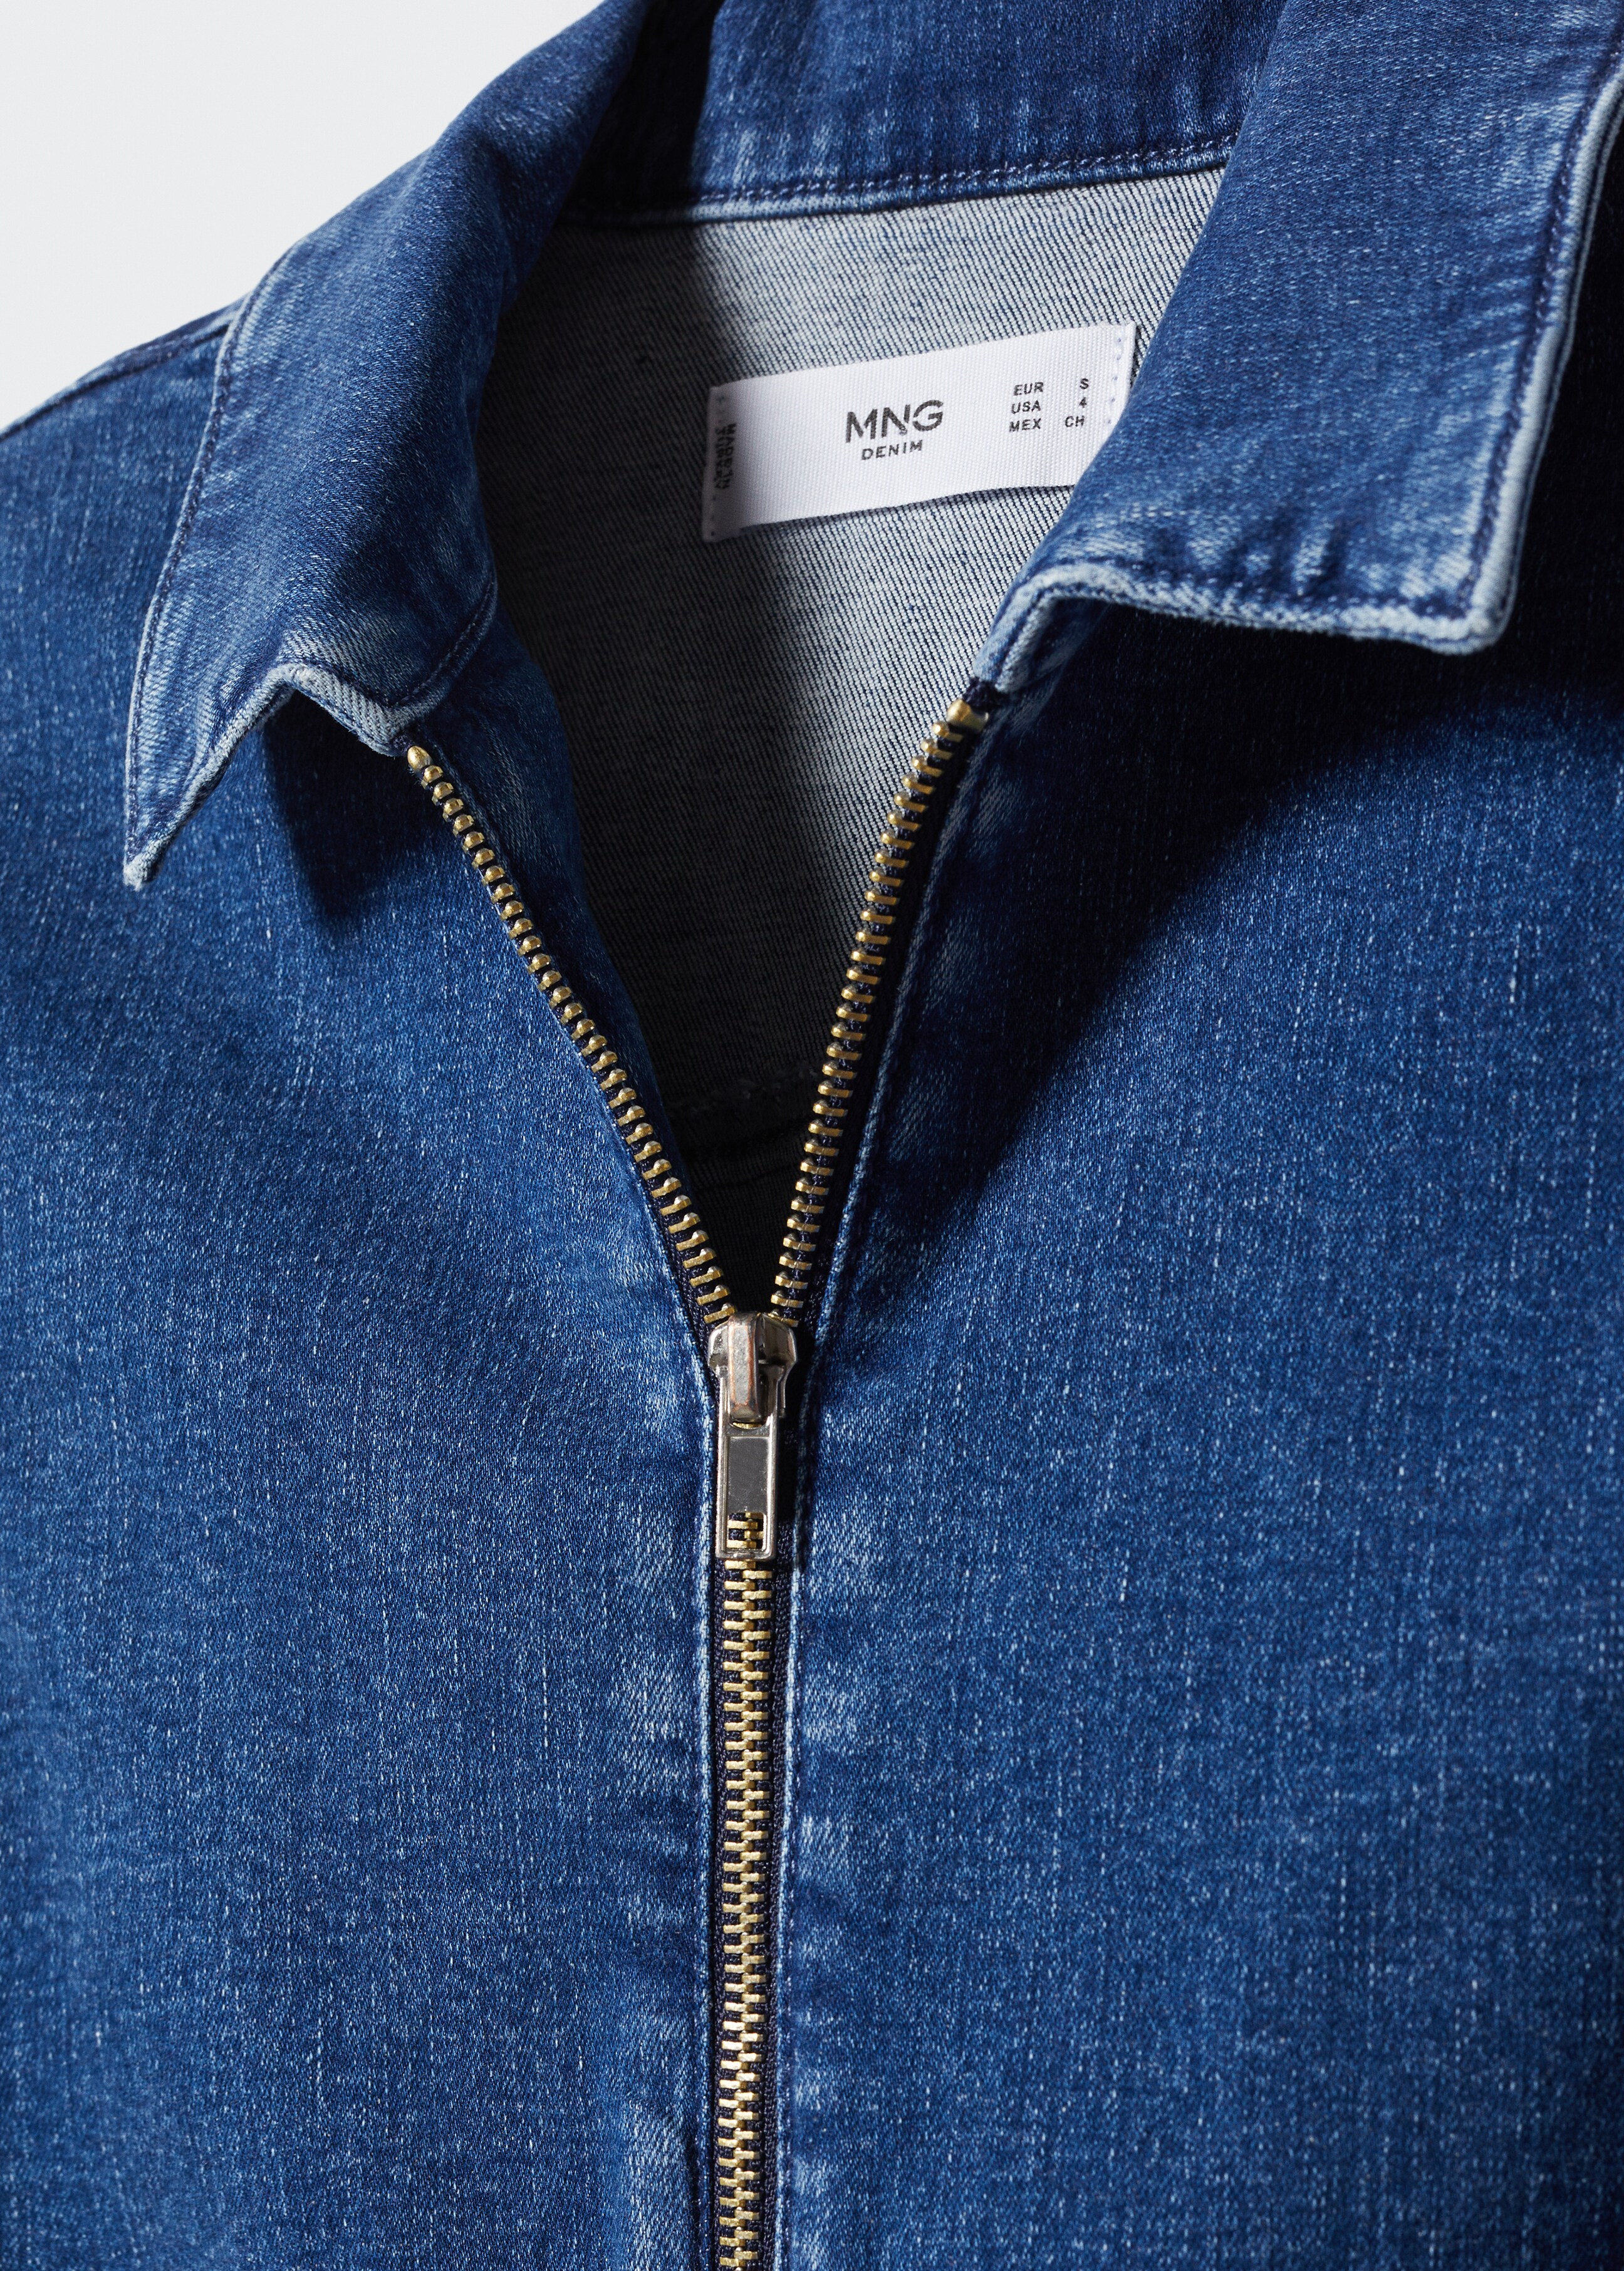 Denim jumpsuit with zipper - Details of the article 8